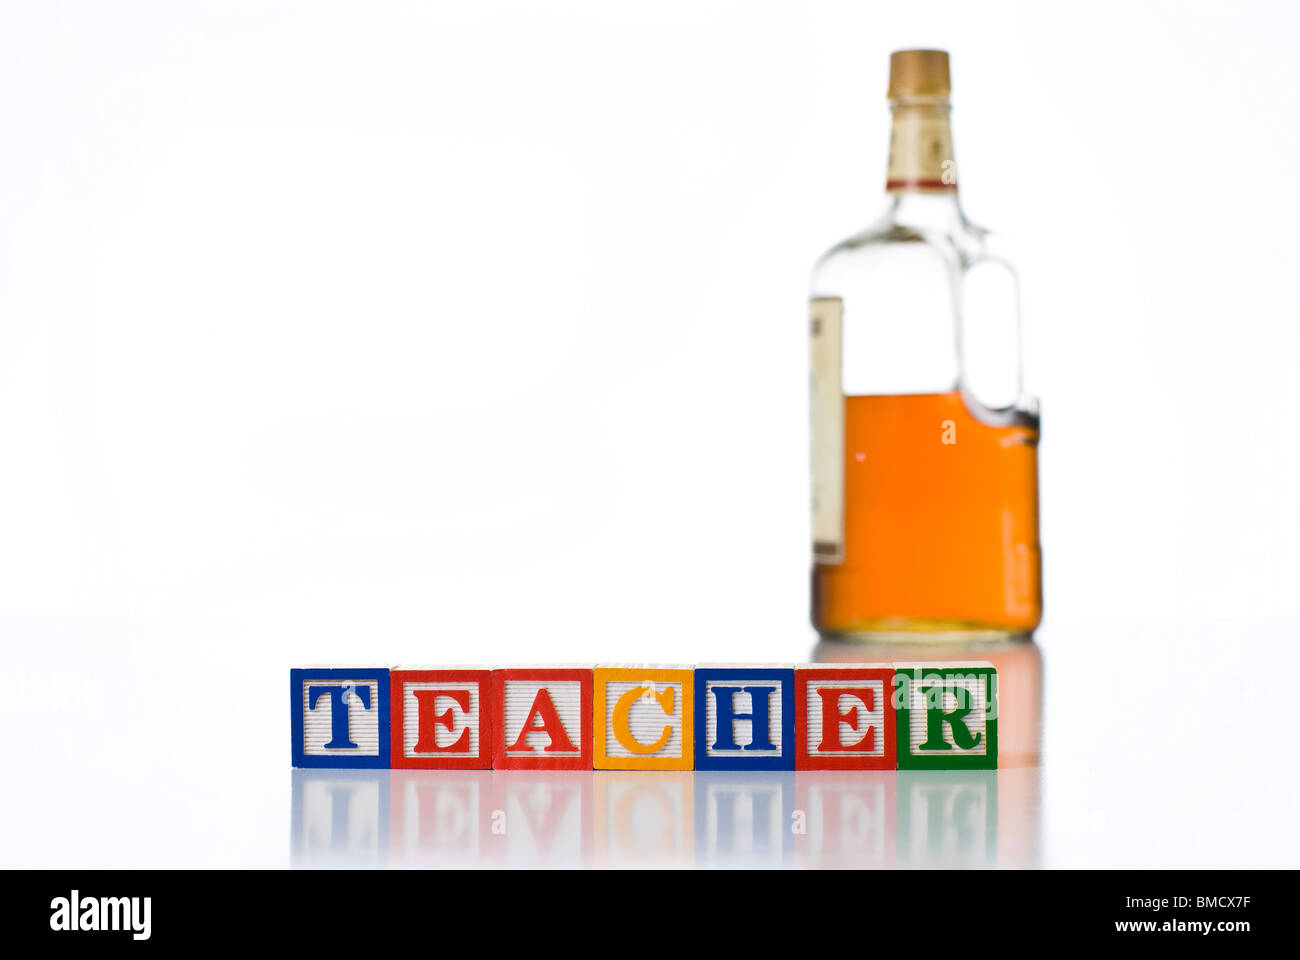 Colorful children's blocks spelling TEACHER with a bottle of liquor Stock Photo